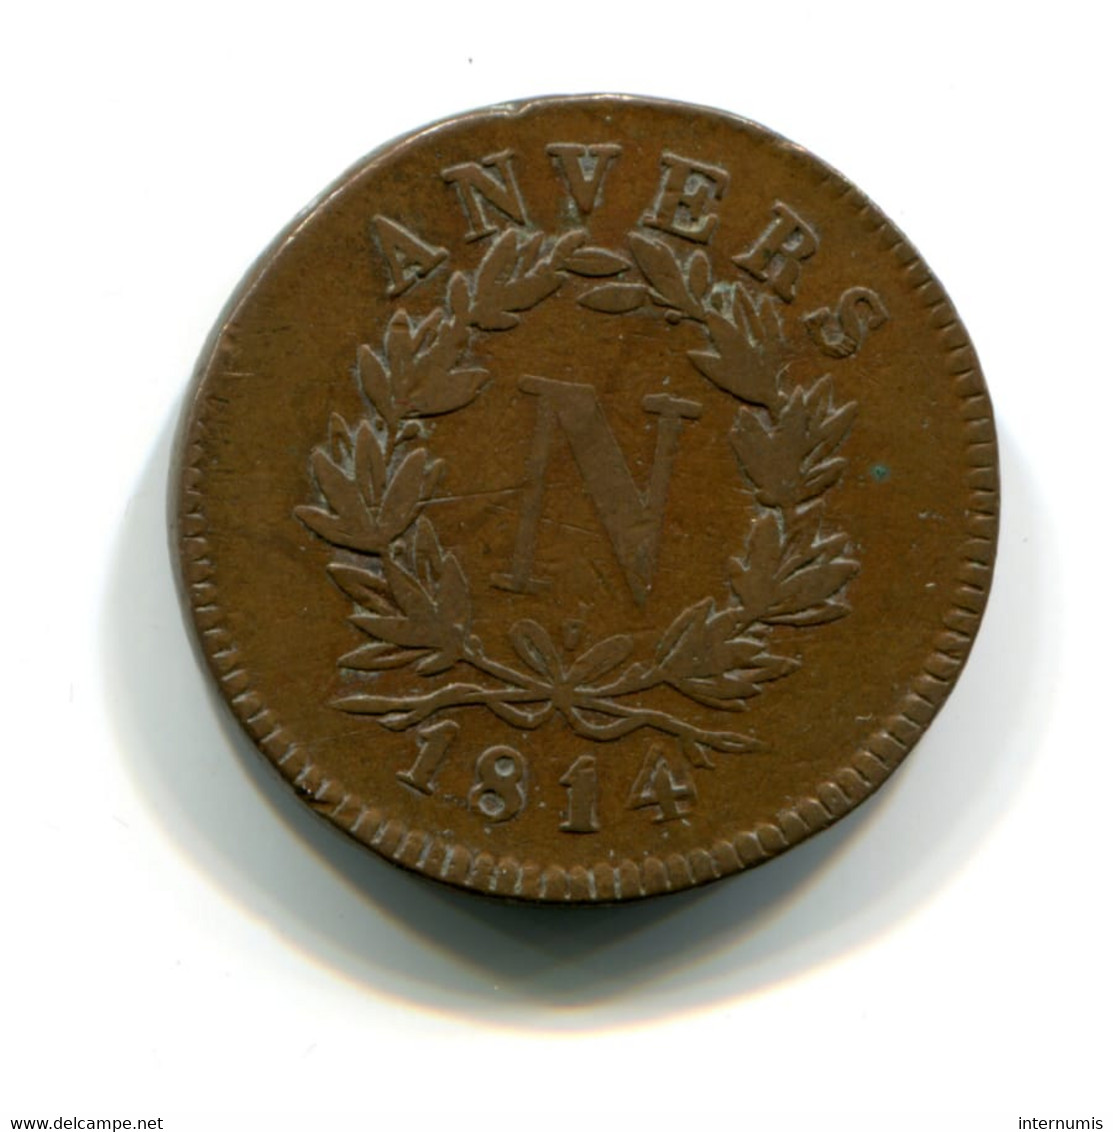 Belgique / Belgium, 5 Centimes, 1814-V, Siege D'Anvers - Napoléon, Bronze, WOLSCHOT, KM#2, F.115B/2, G.129b, COL.10a - 1814 Belagerung Von Antwerpen